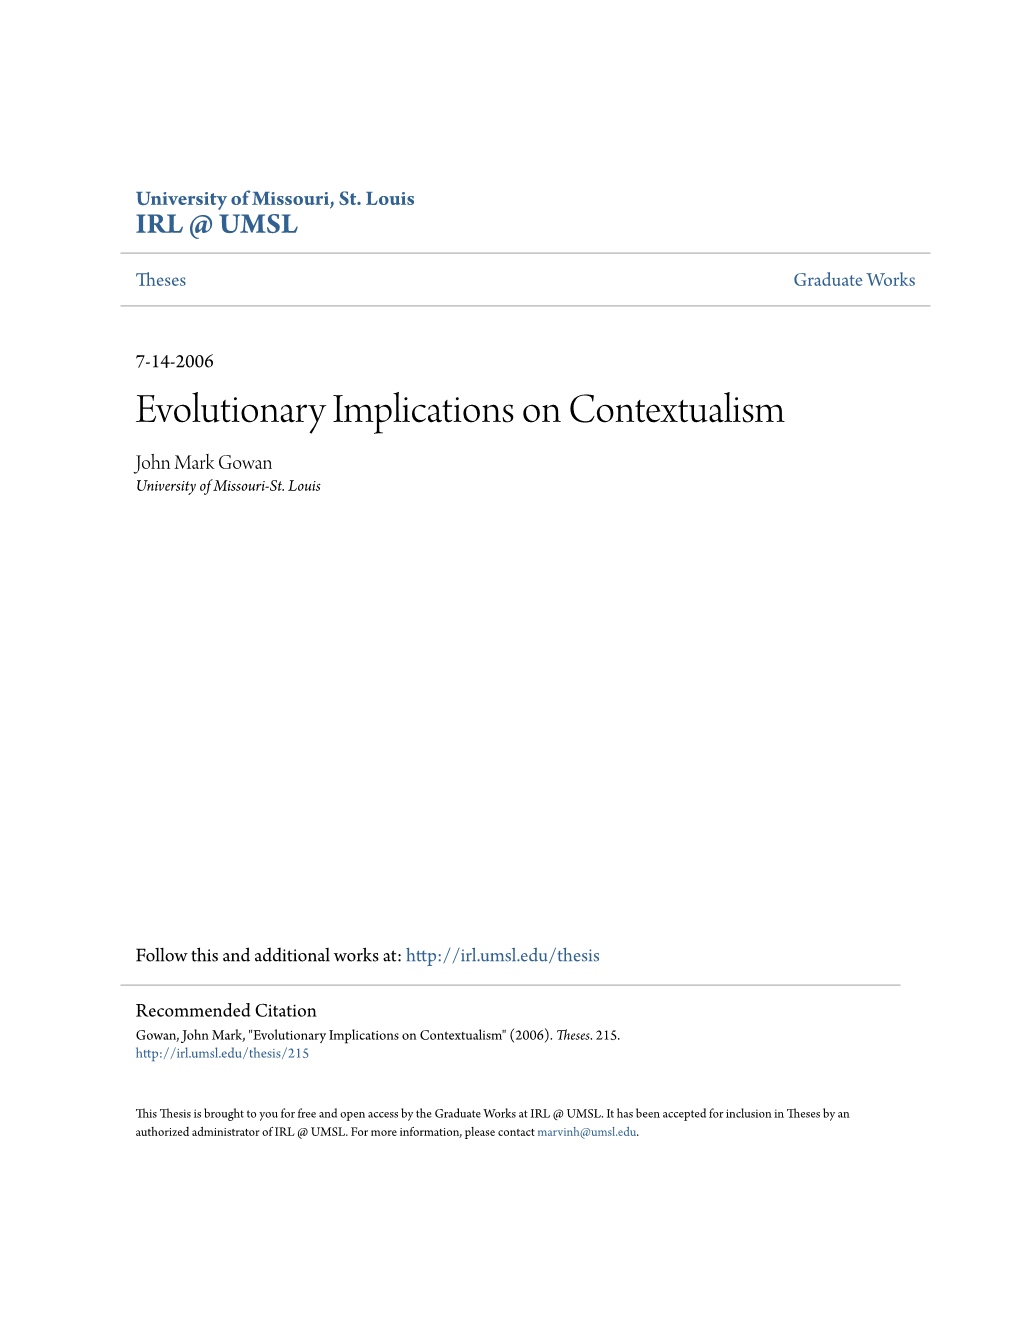 Evolutionary Implications on Contextualism John Mark Gowan University of Missouri-St